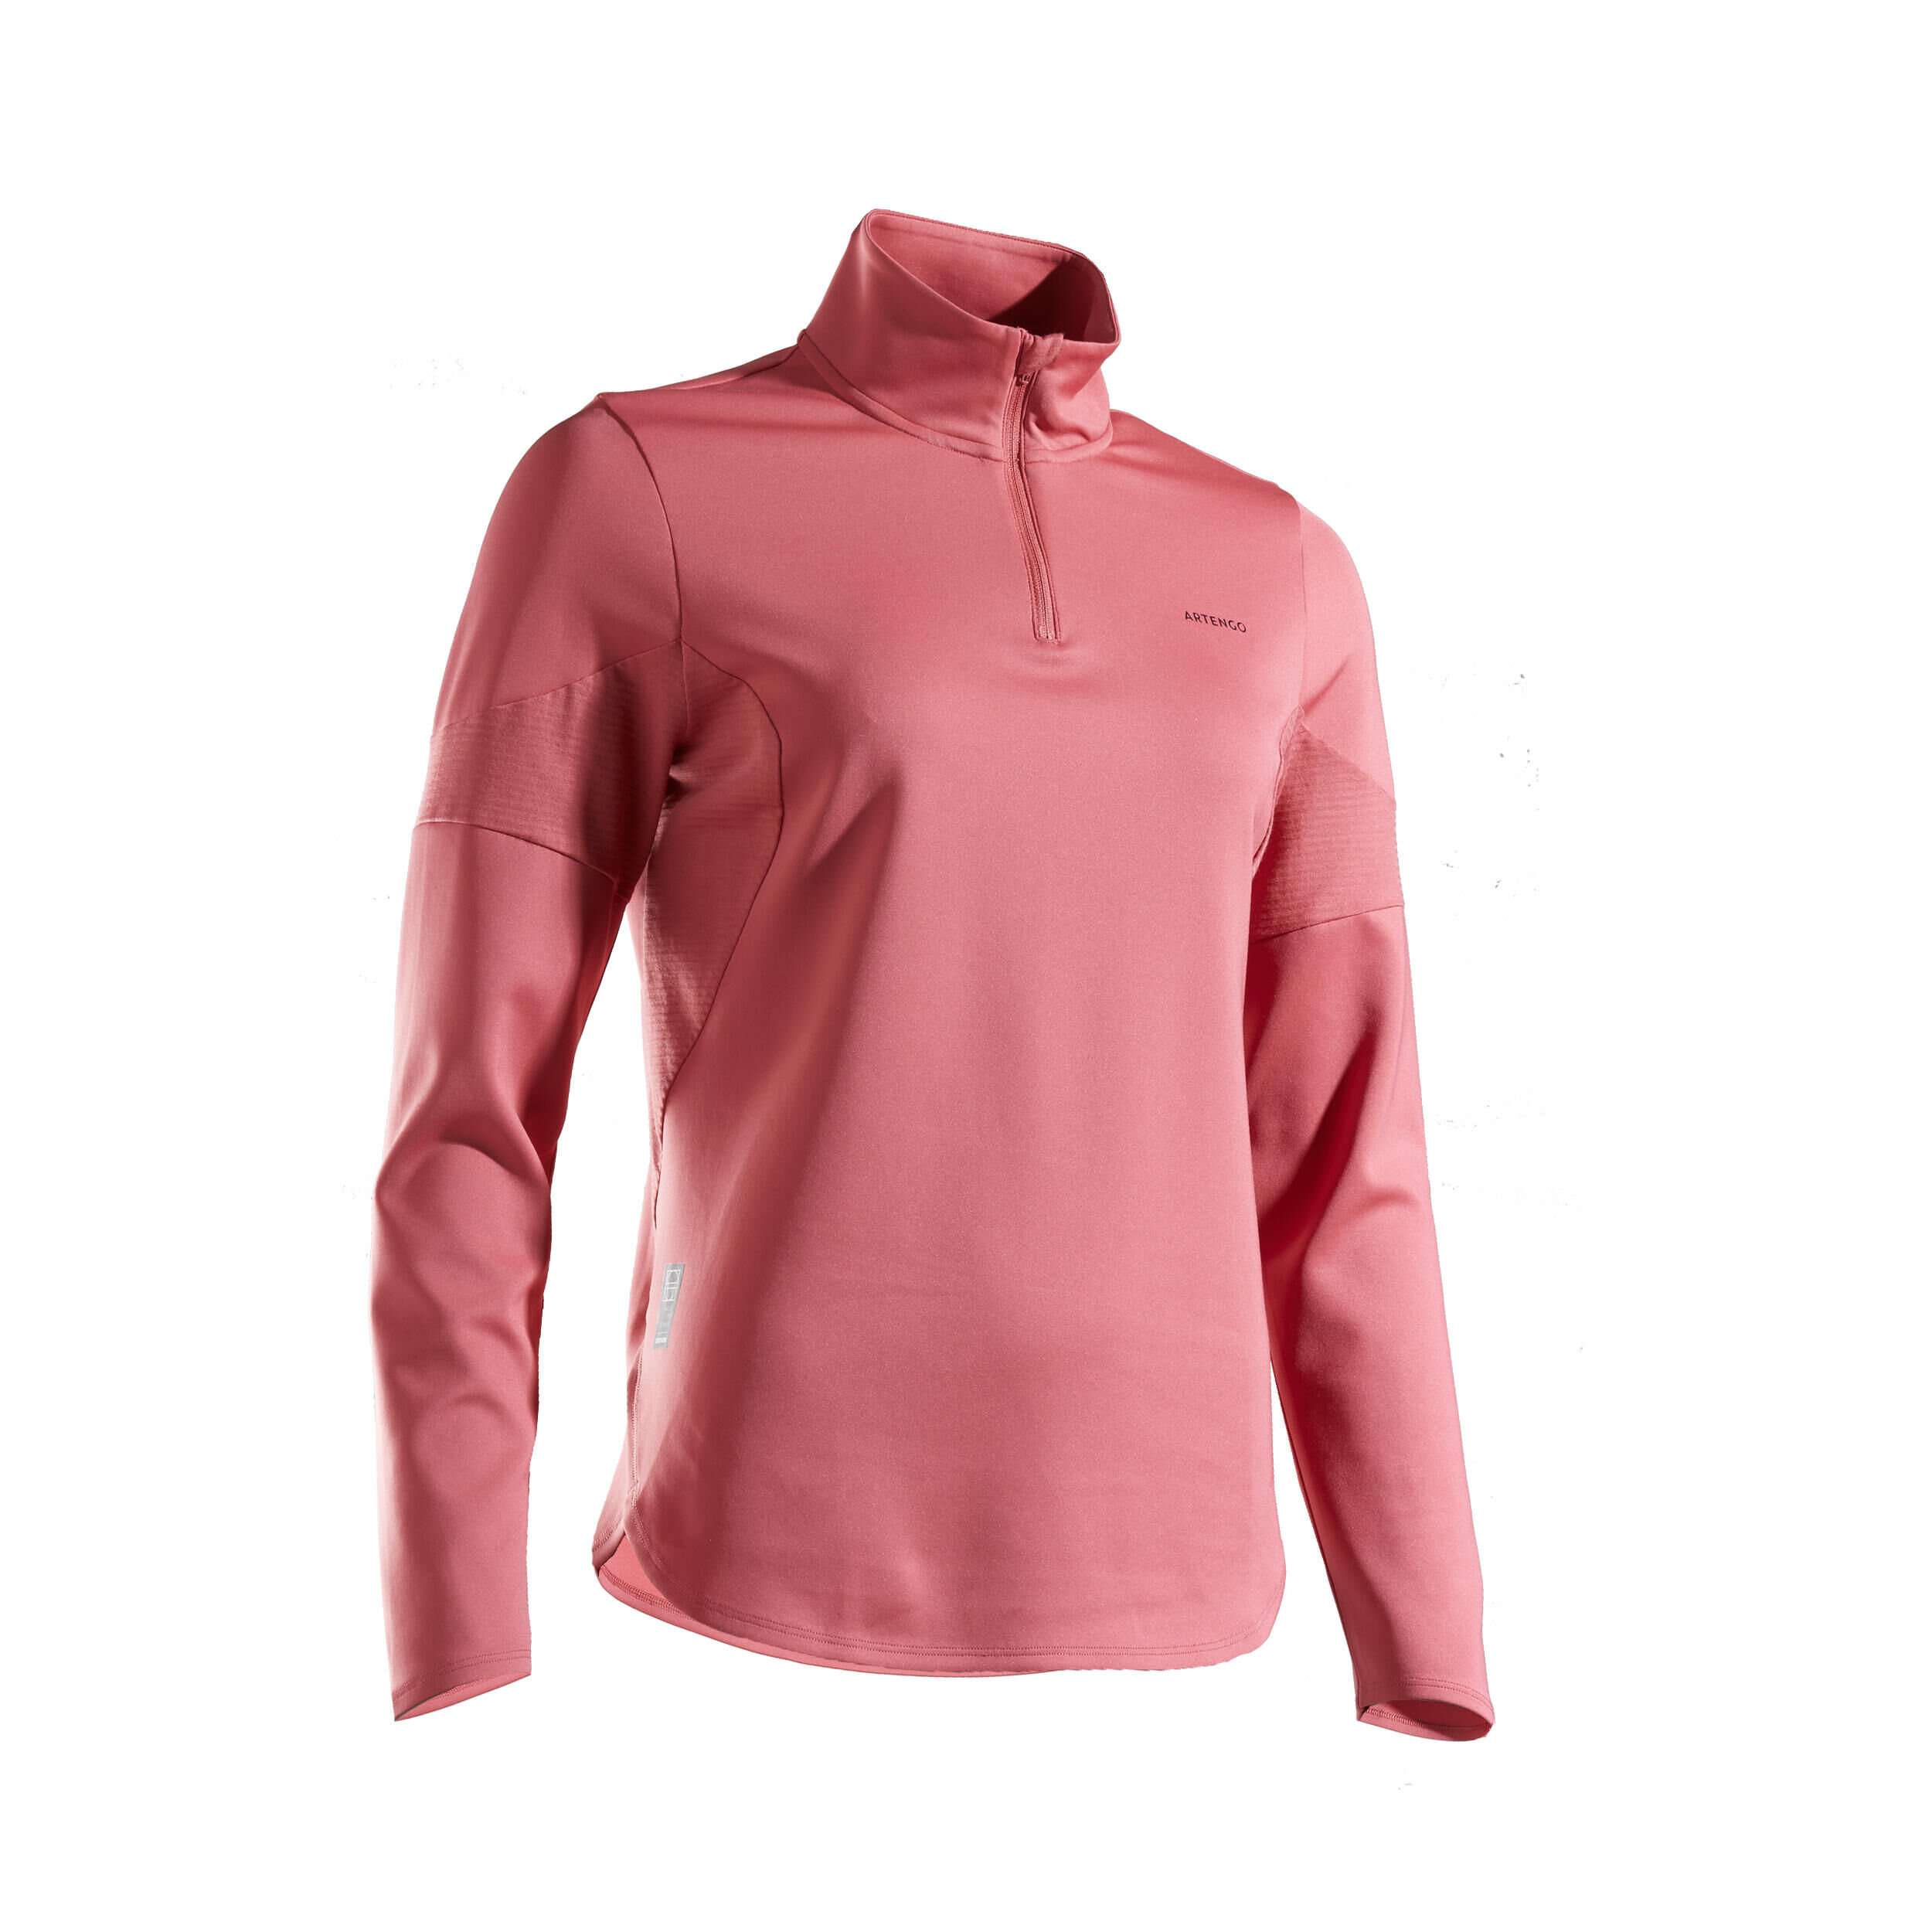 ARTENGO Women's Long-Sleeved Thermal T-Shirt TH 900 - Pink